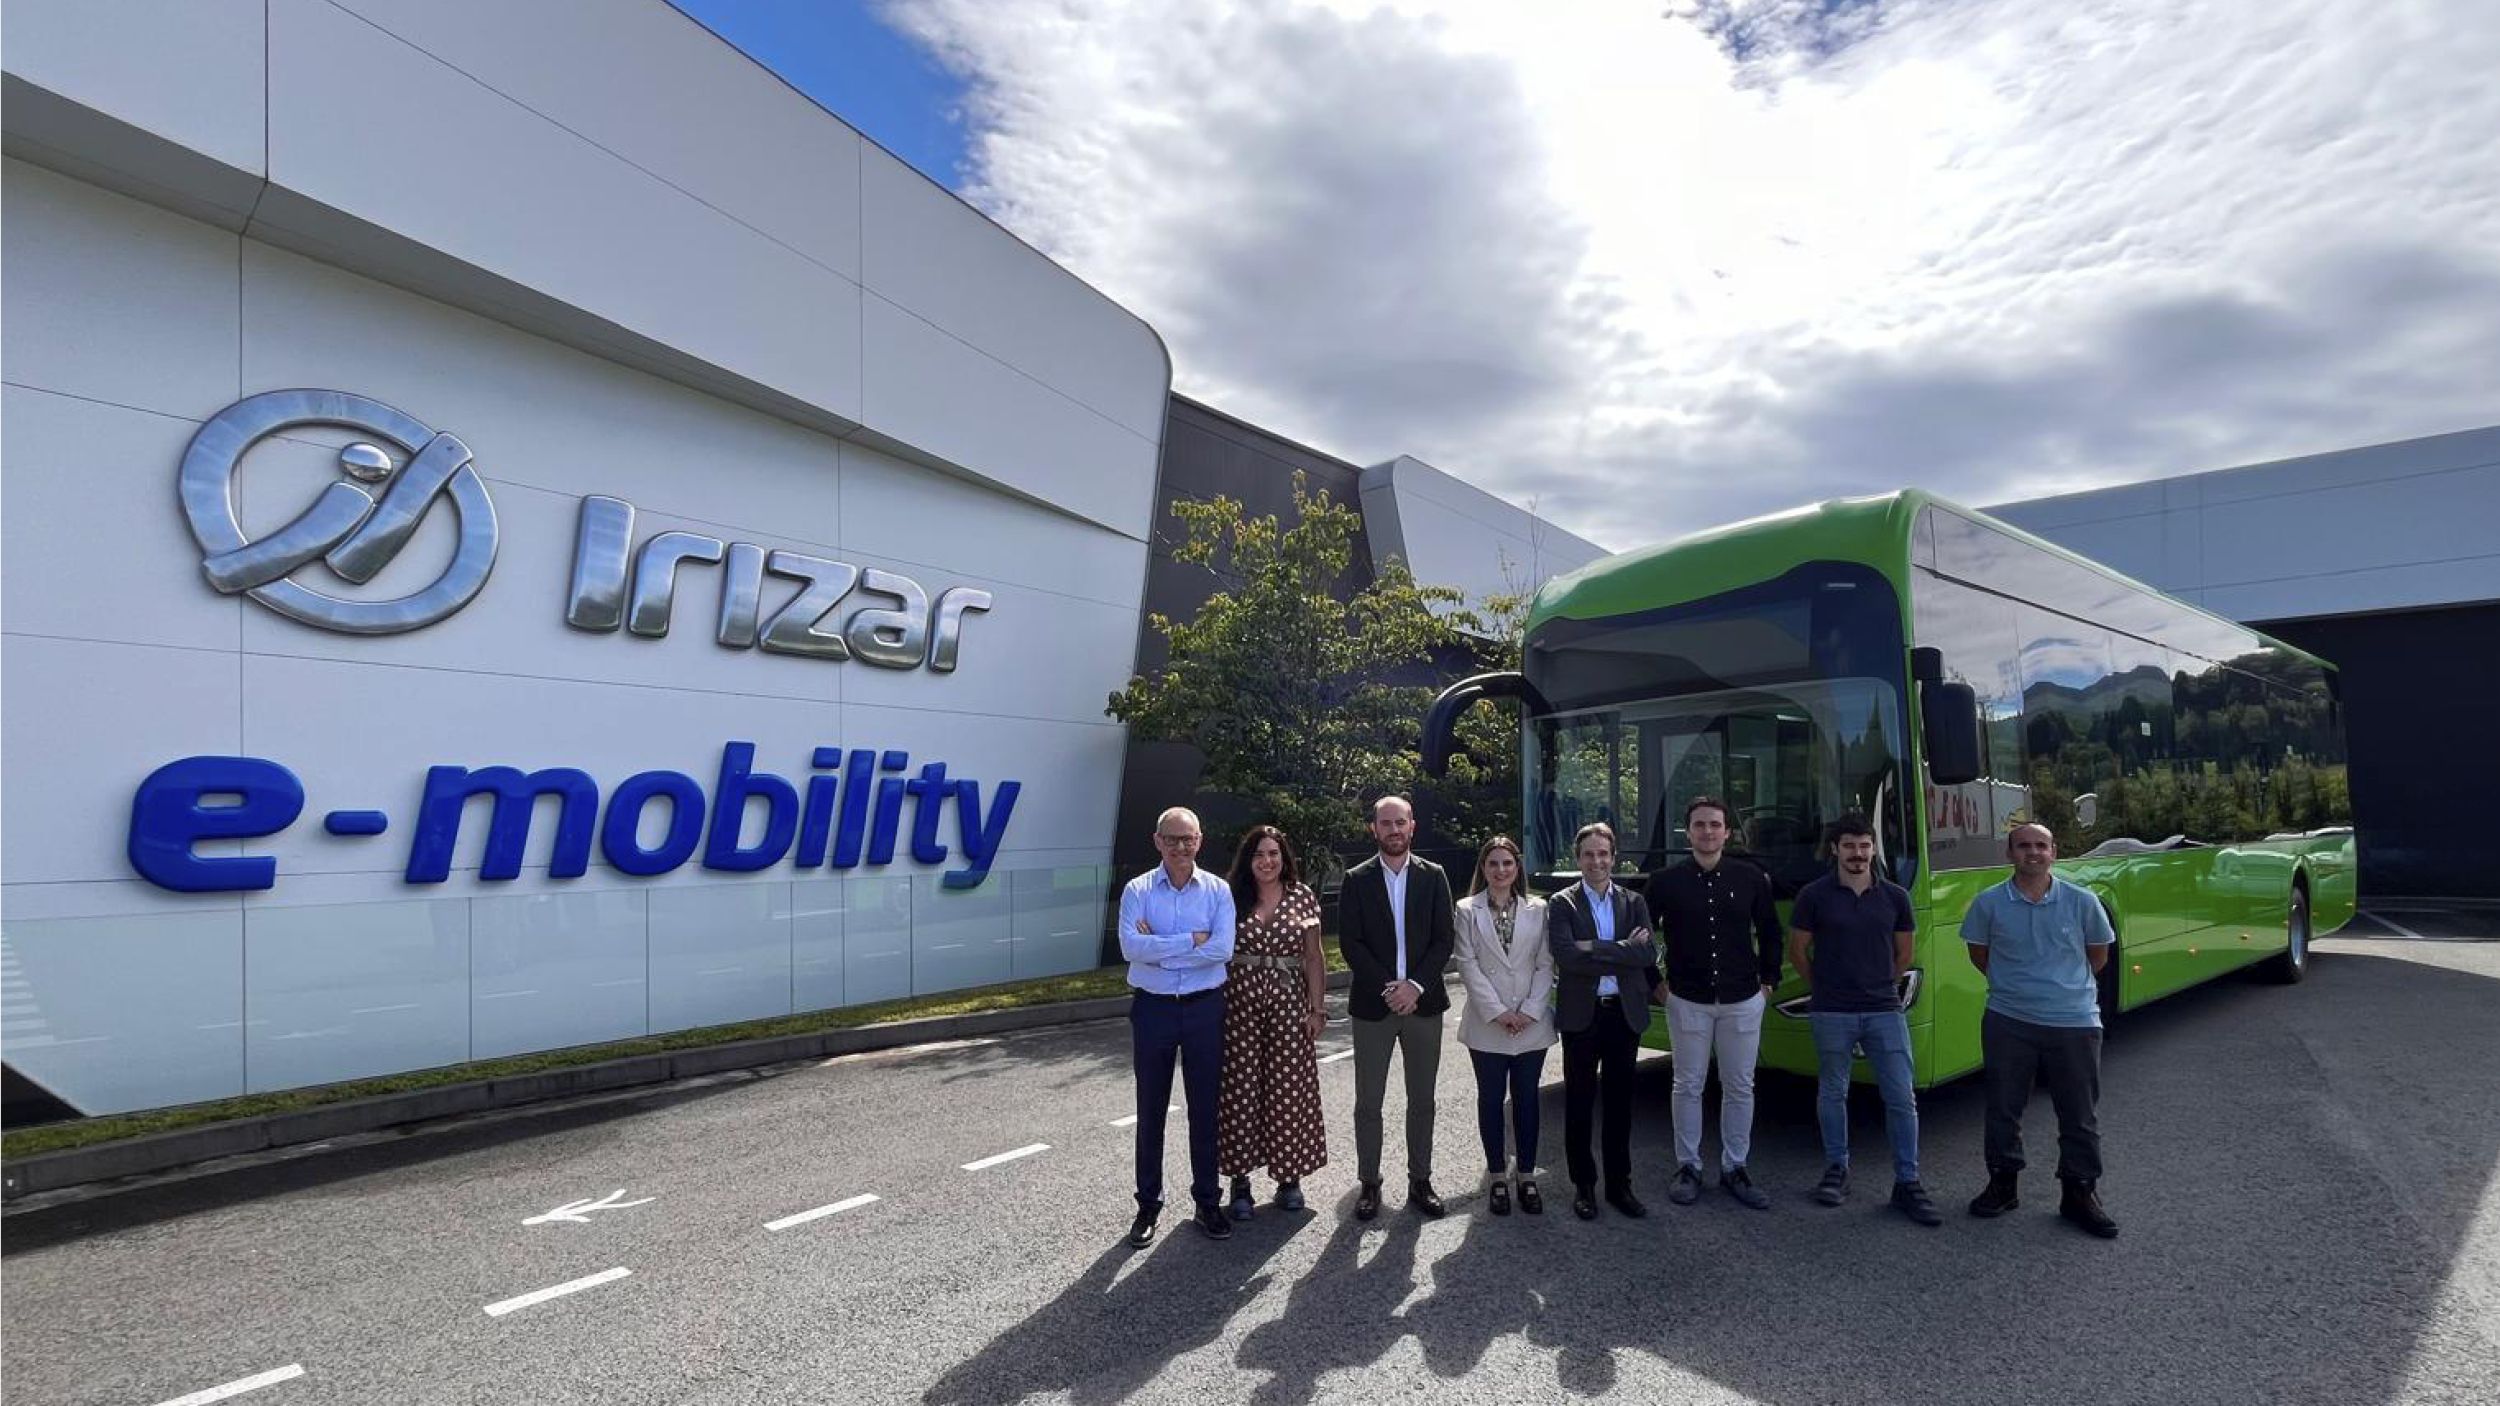 Twenty-eight new Irizar e-mobility buses for the Region of Murcia